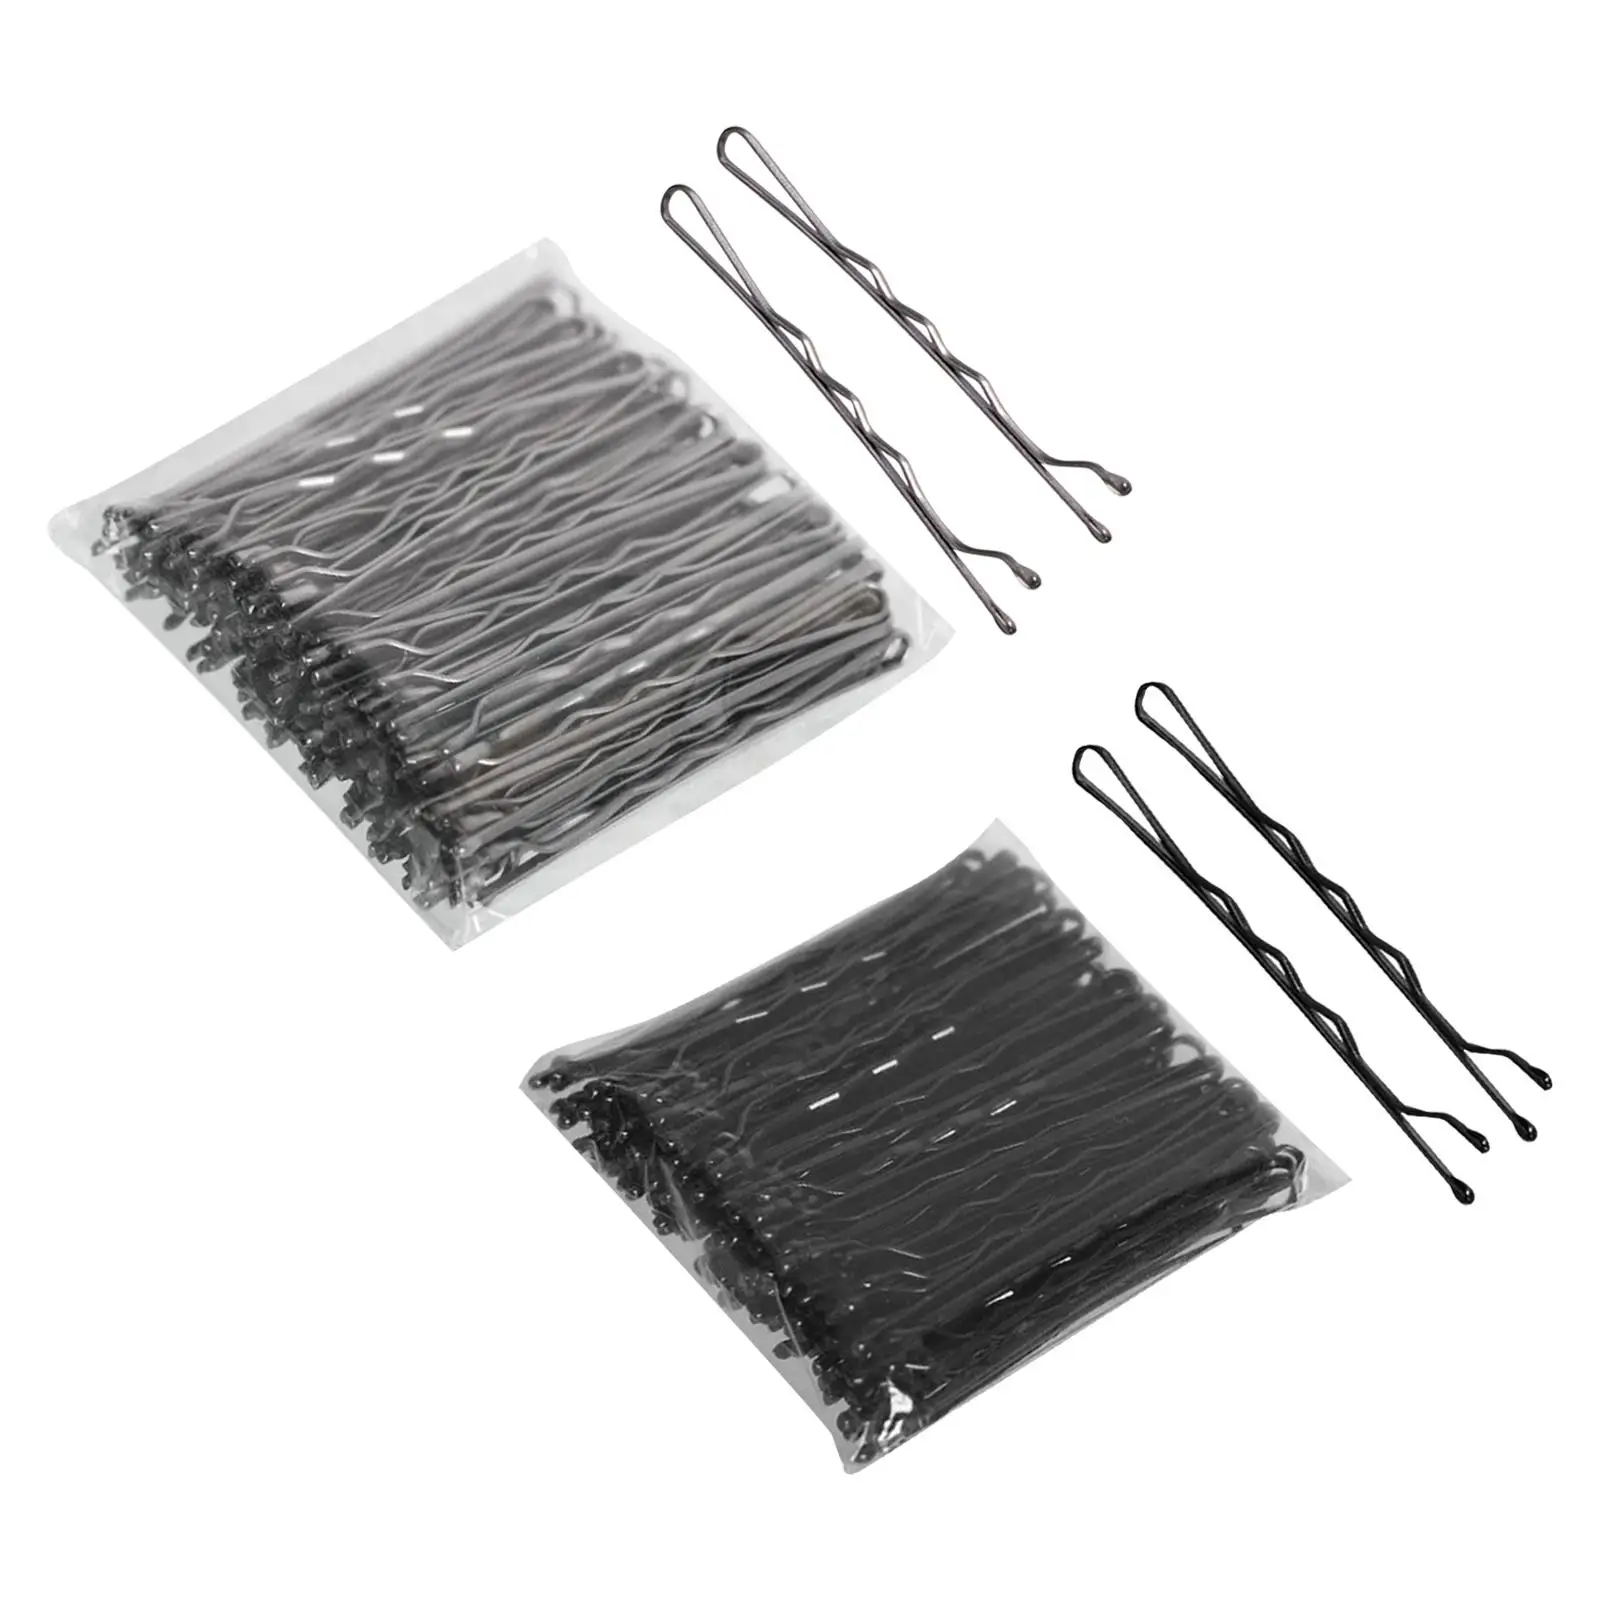 100x Hair Pin Keep Hairs in Place Metal Hair Accessories for Salon Girls